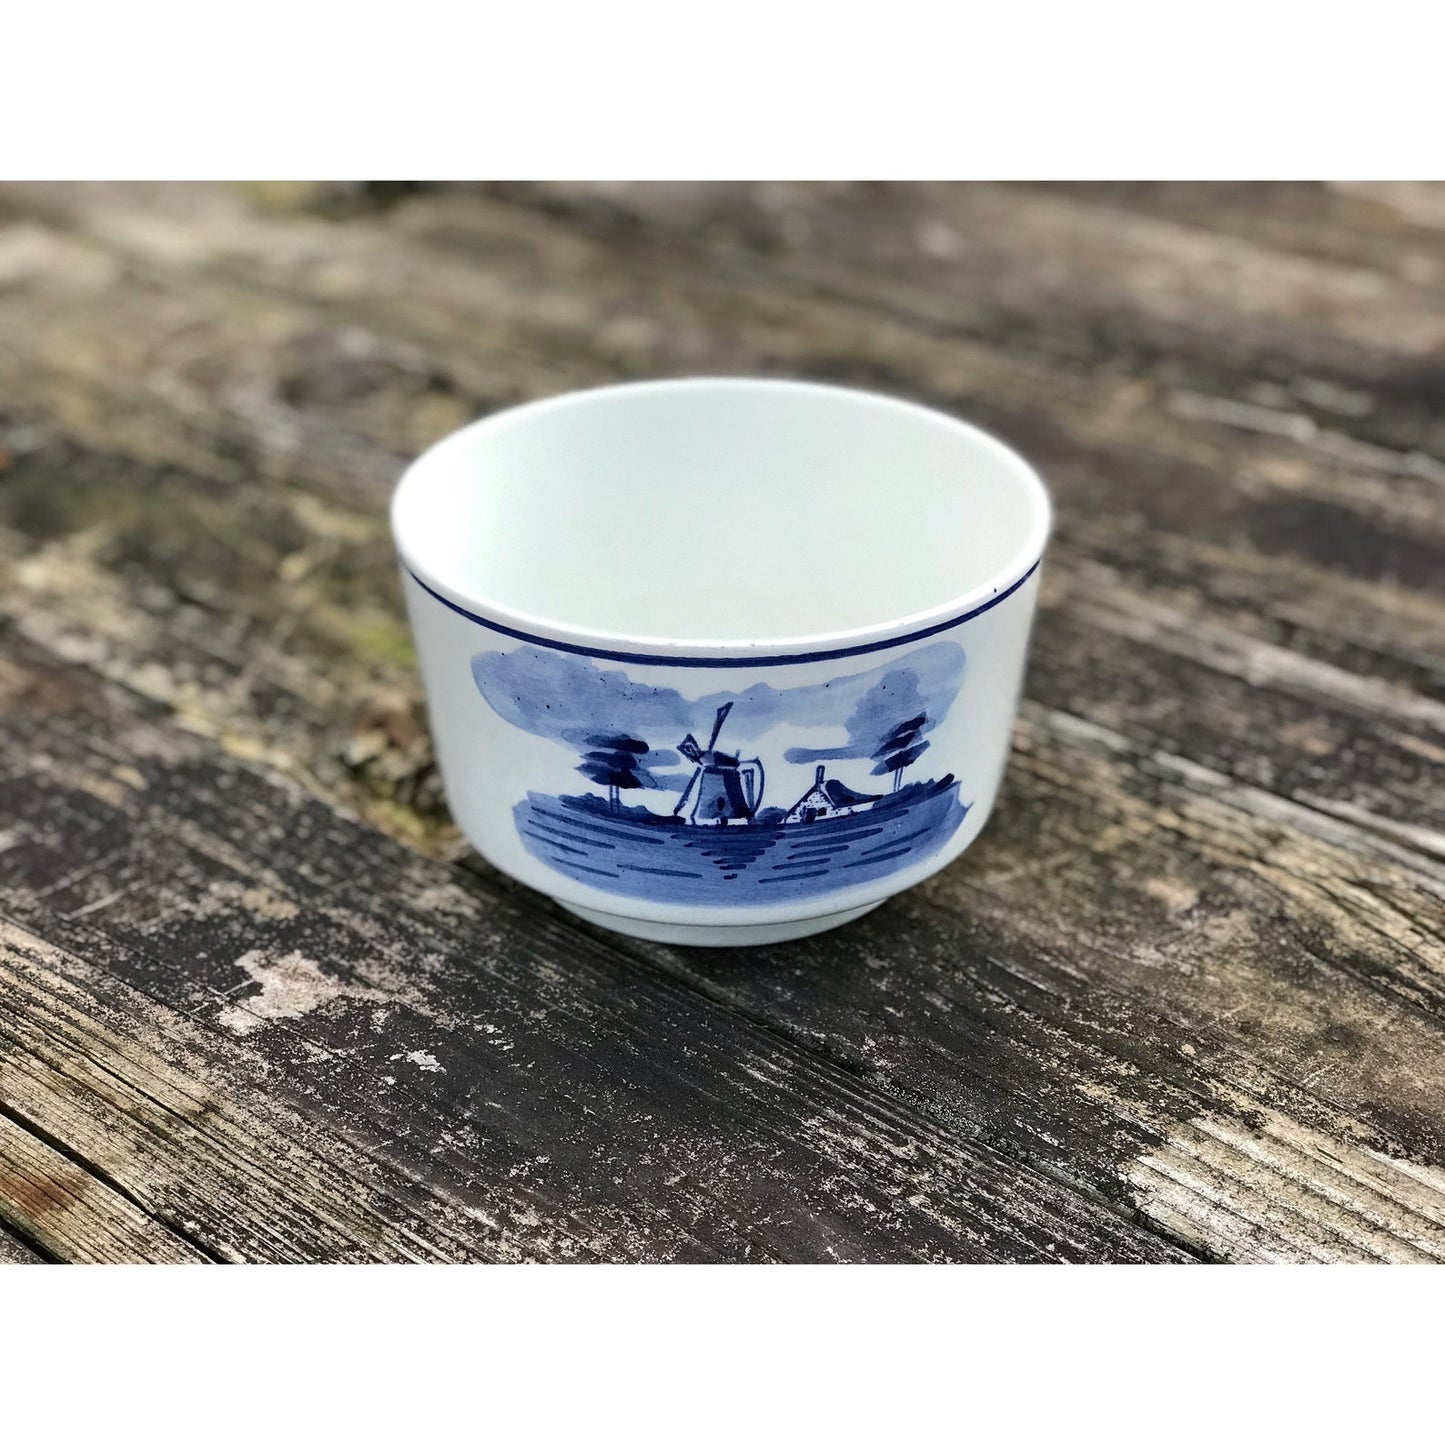 Vintage Delft Blauw Planter / Bowl